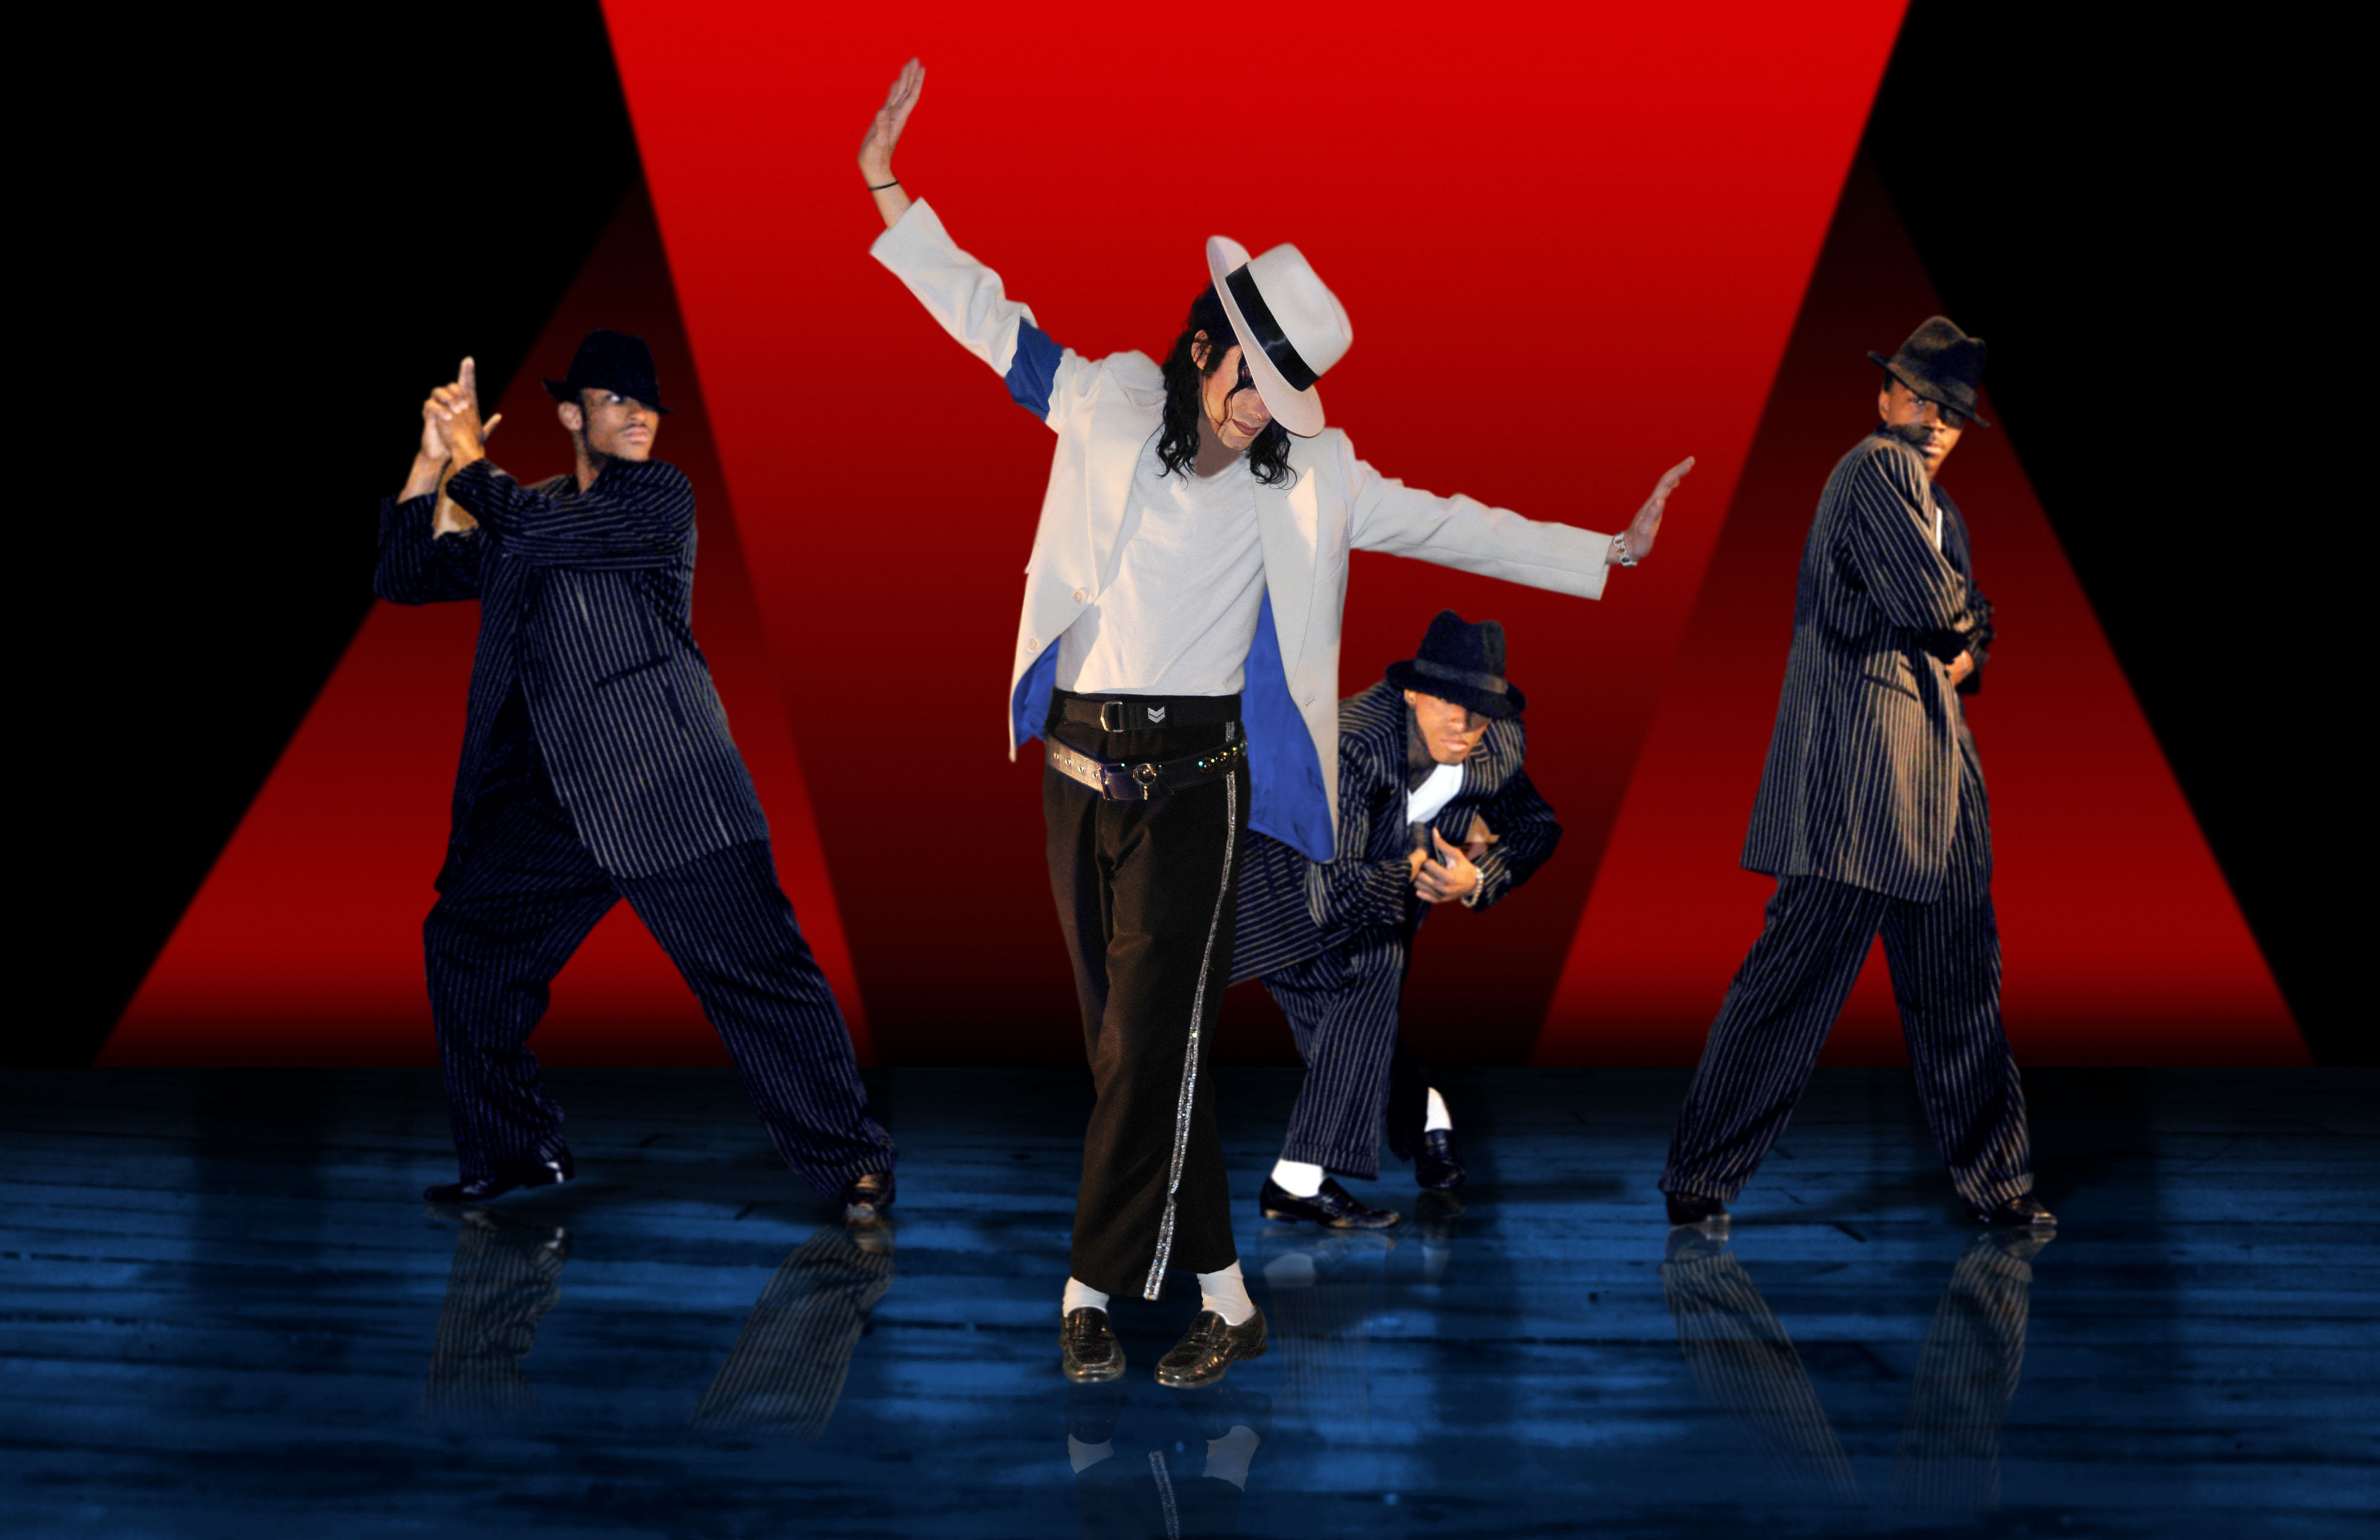 Michael jackson dance. Шоу Майкла Джексона. Michael Jackson Dance pic.